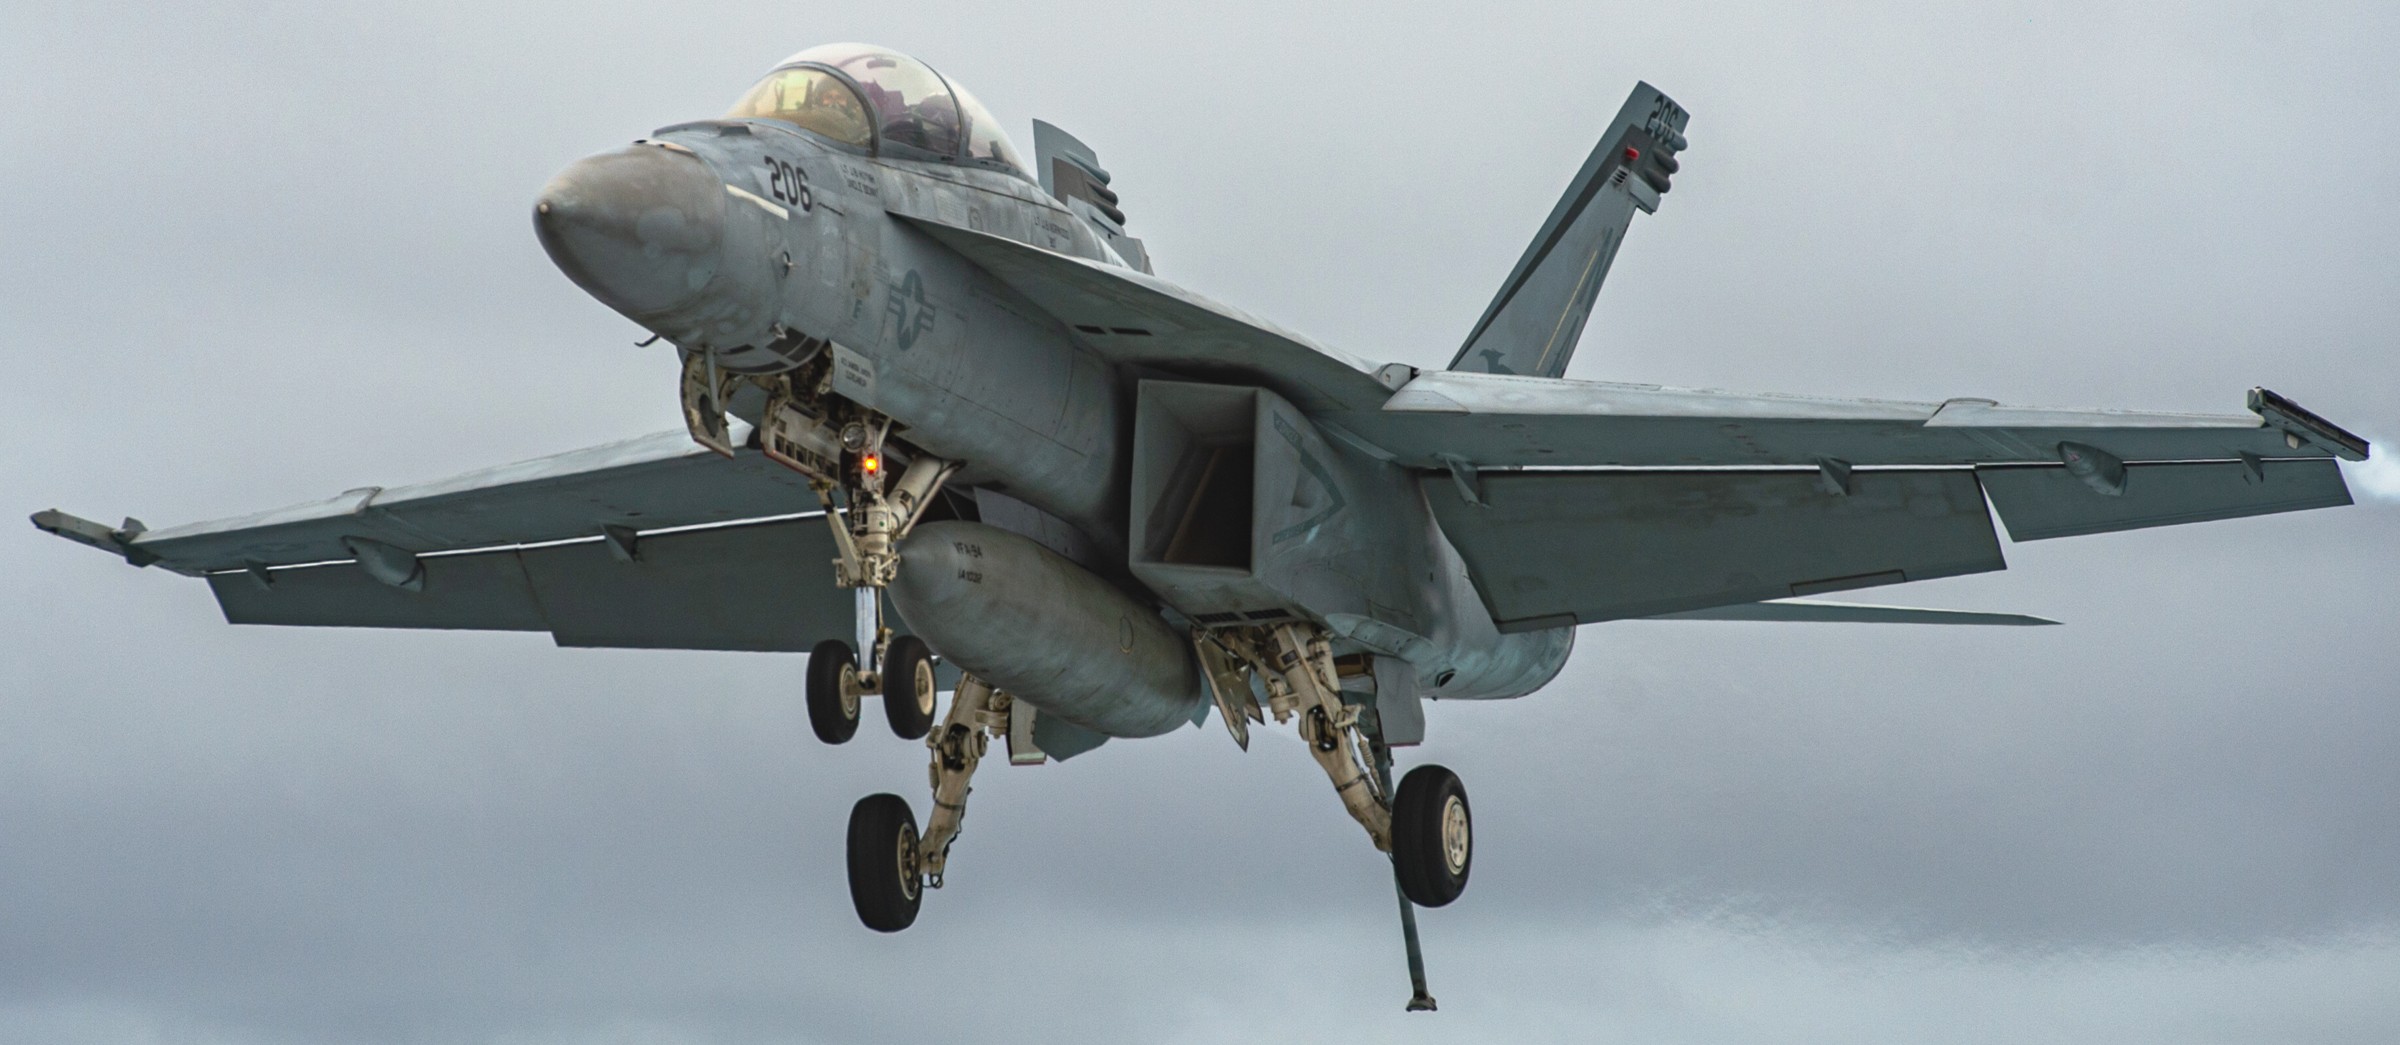 vfa-94 mighty shrikes strike fighter squadron f/a-18e super hornet cvw-17 uss nimitz cvn-68 us navy 101